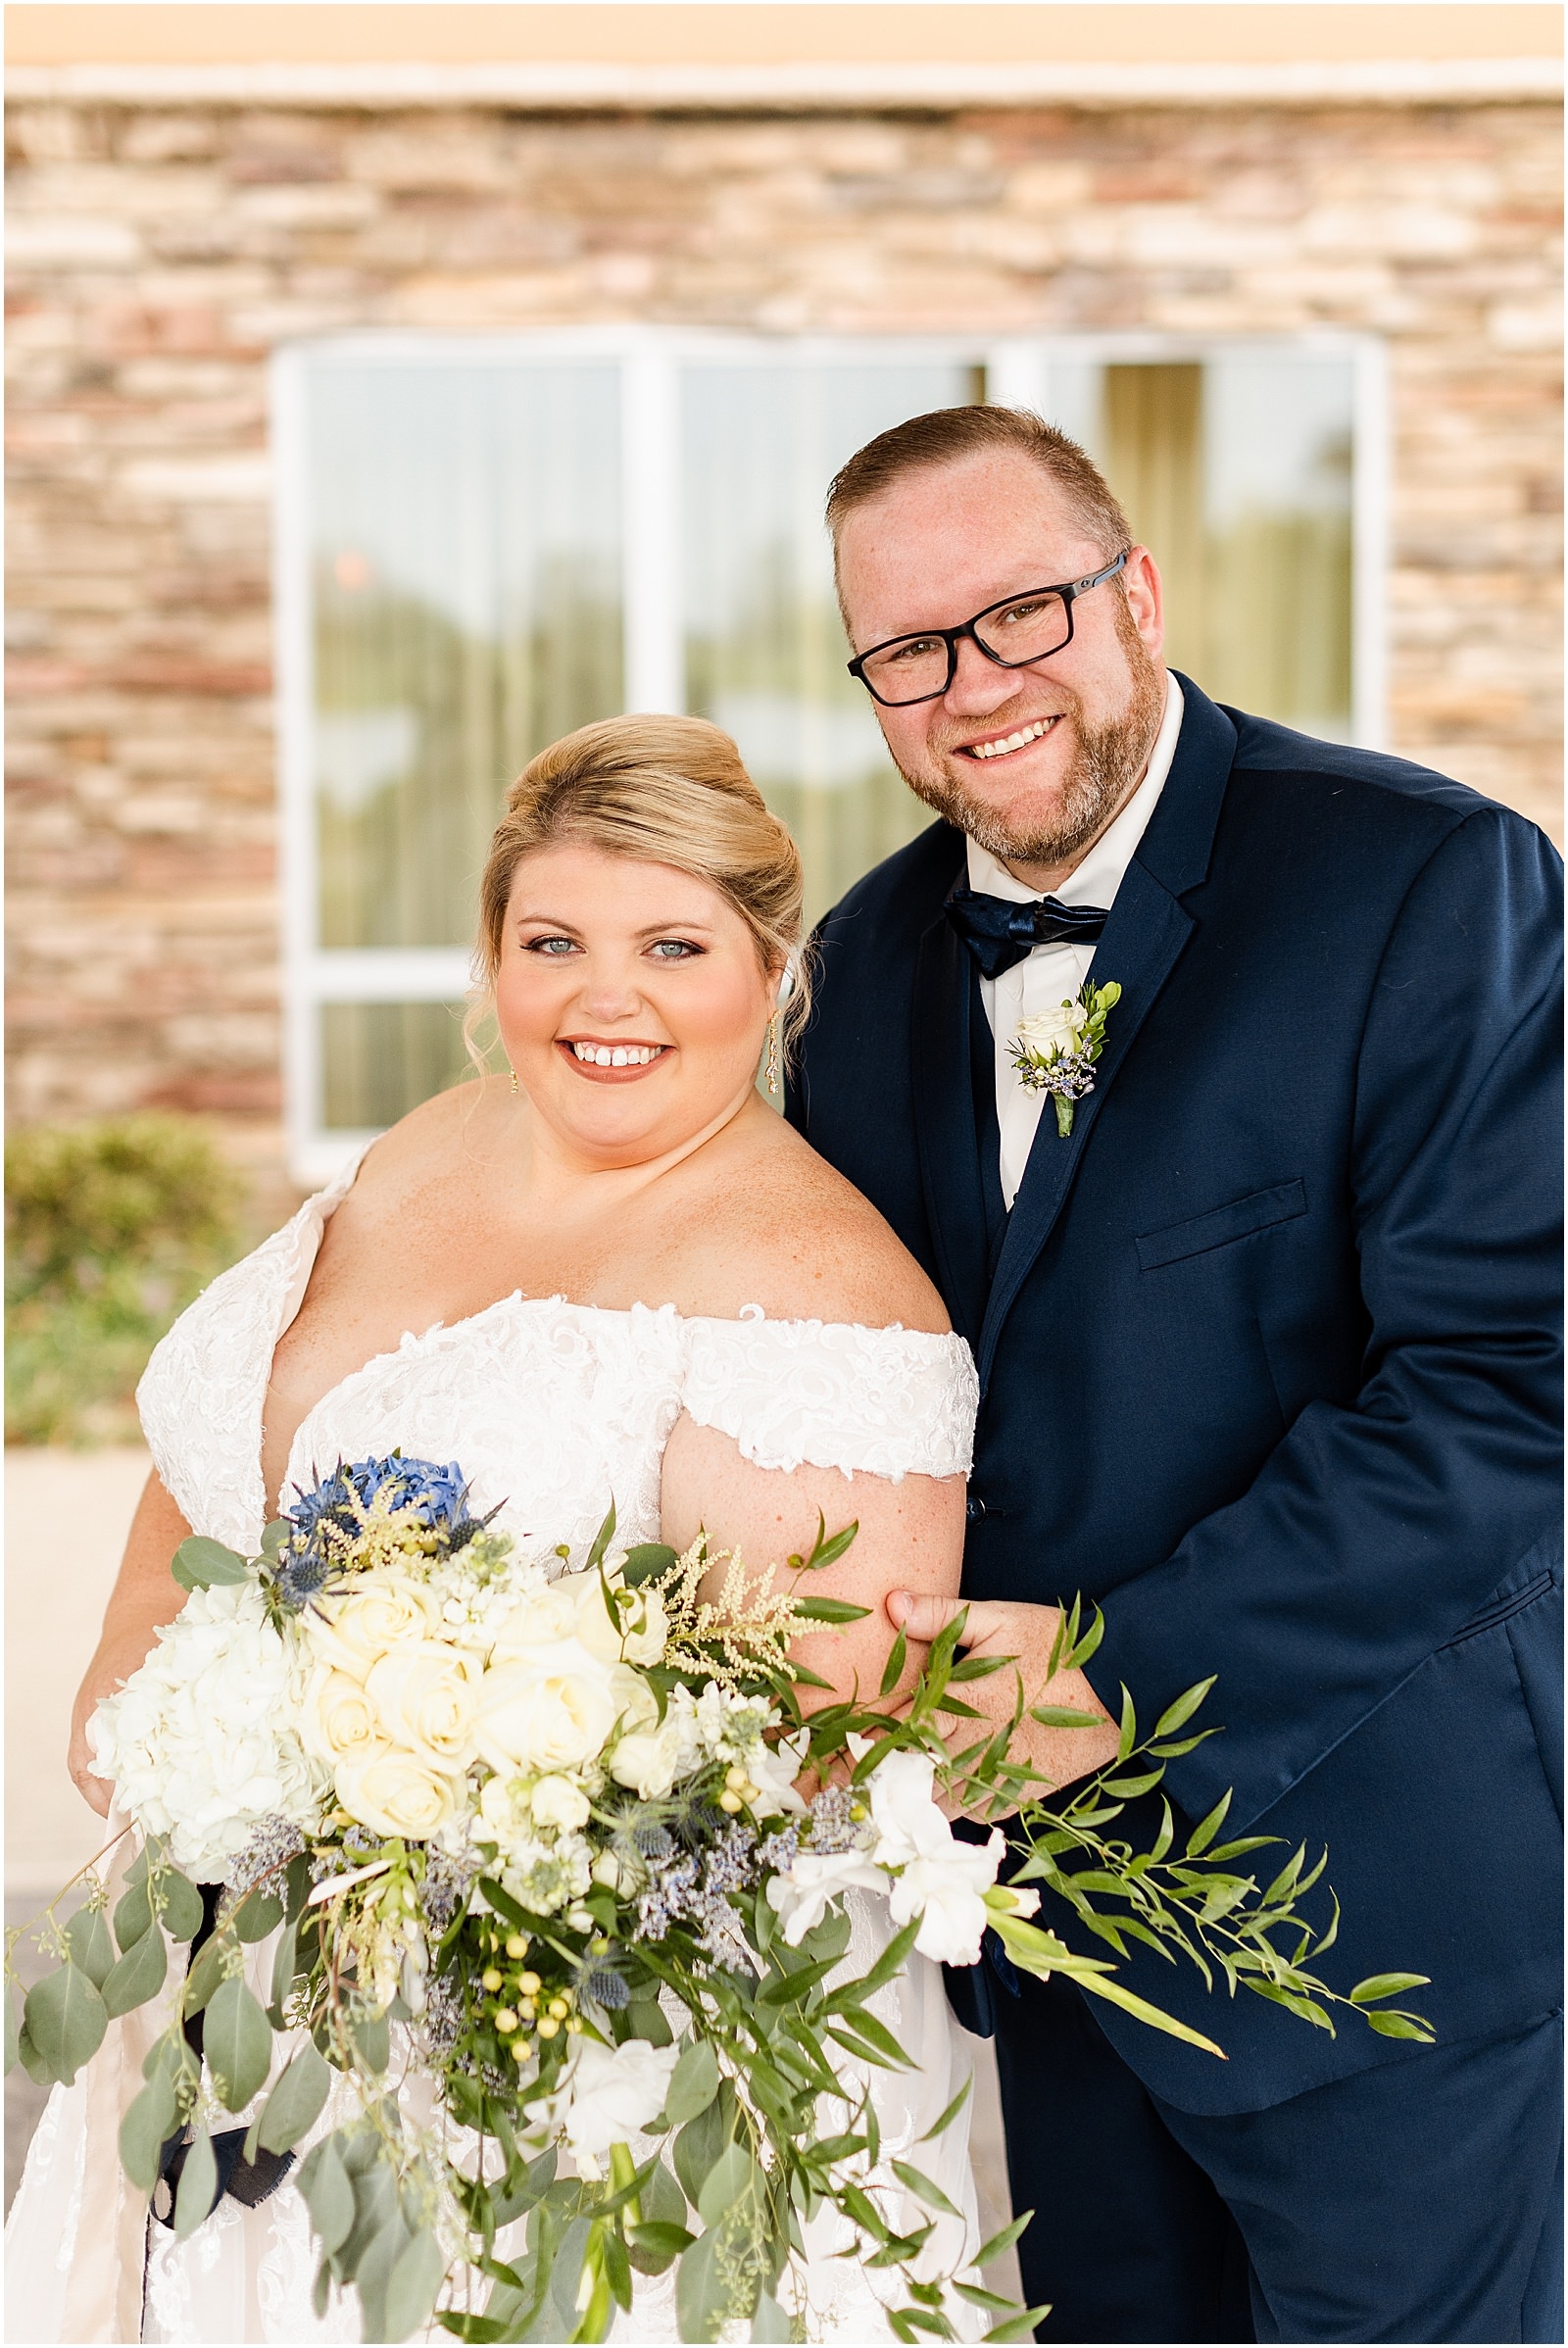 Brittany and Neil's Wedding at Neu Chapel Bret and Brandie | Evansville Photographers | @bretandbrandie-0045.jpg